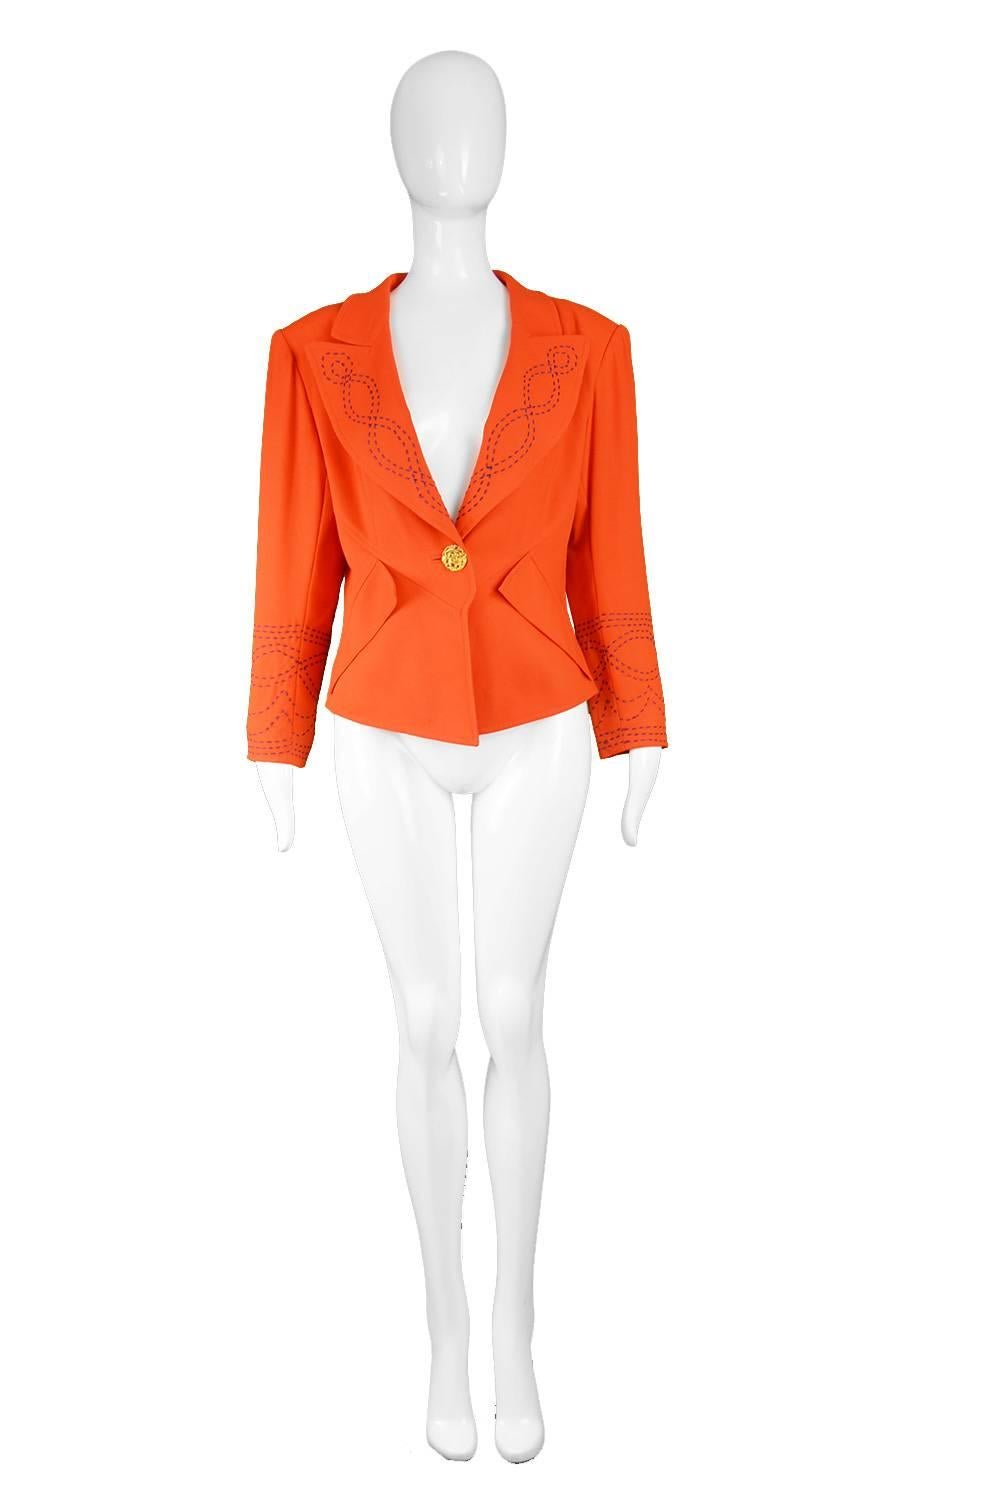 Christian Lacroix Vintage Orange Wool Blazer with Running Stitch Detail, 1980s

Estimated Size: UK 14-16/ US 10-12/ EU 42-44. Please check measurements. 
Bust - 40” / 101cm
Waist - 34” / 86cm
Length (Shoulder to Hem) - 20” / 51cm
Shoulder to